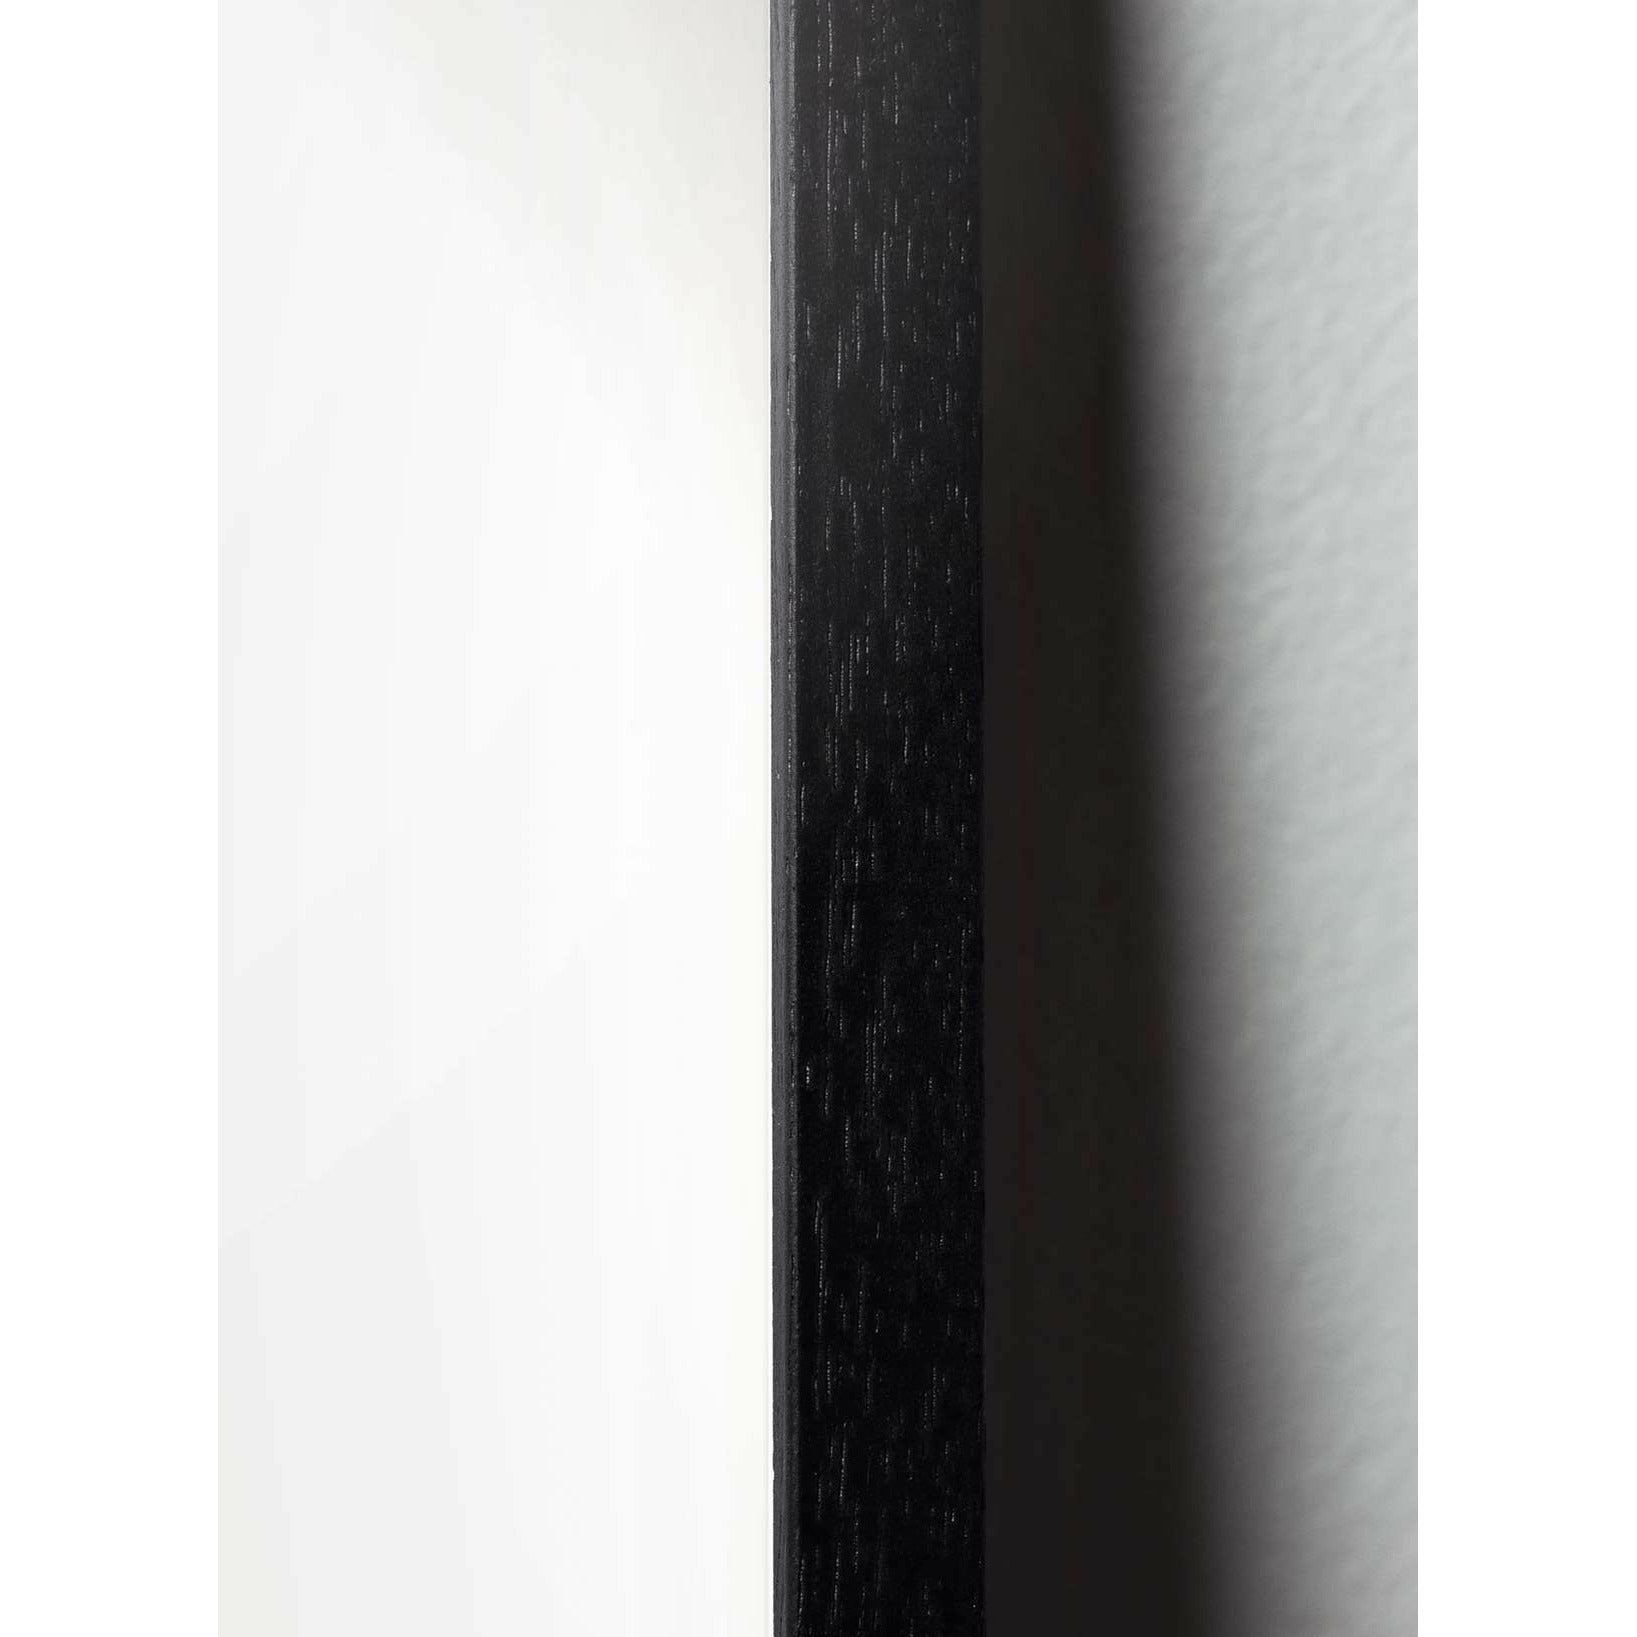 Brainchild Nallebjörnslinje affisch, ram i svart -målat trä 70x100 cm, vit bakgrund